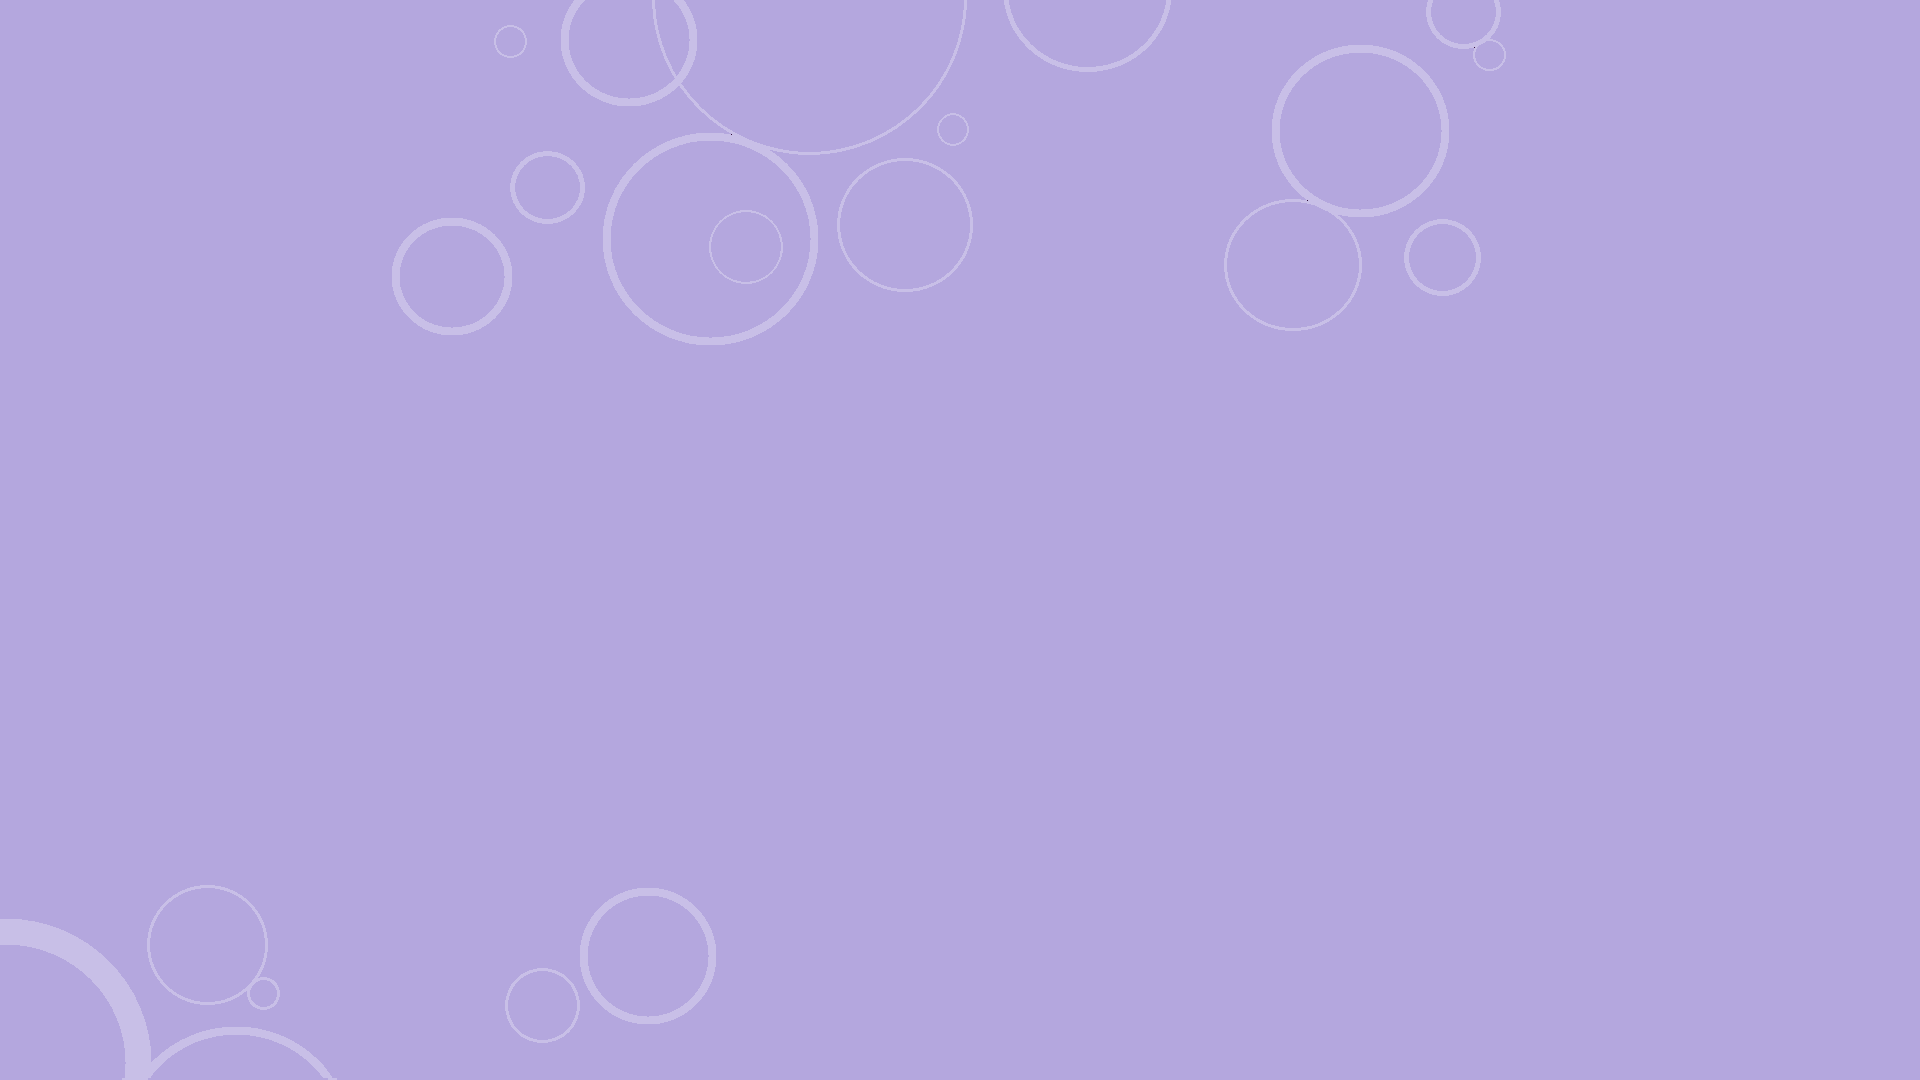 Lavender Windows 8 Bubbles Background by gifteddeviant on DeviantArt